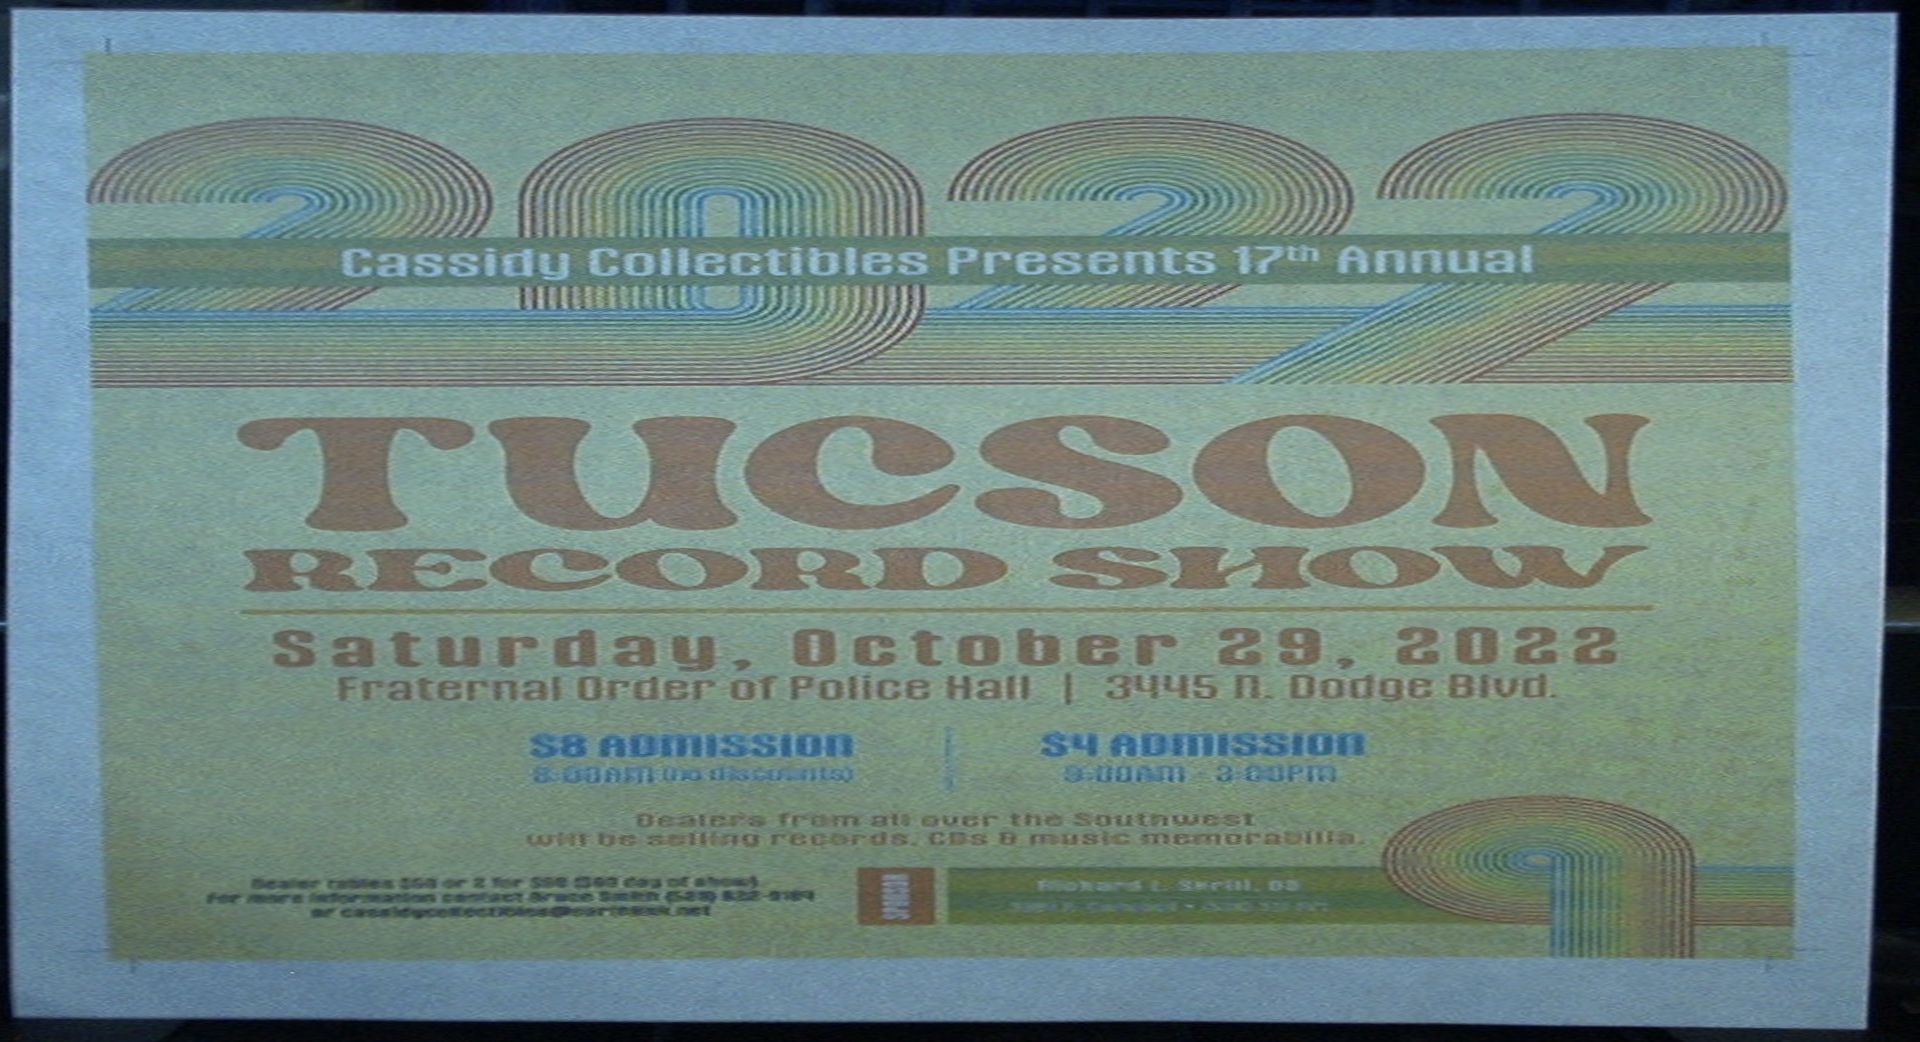 The 17TH Annual Tucson Record Show on 29th Oct, 2022, Tucson, Arizona, United States